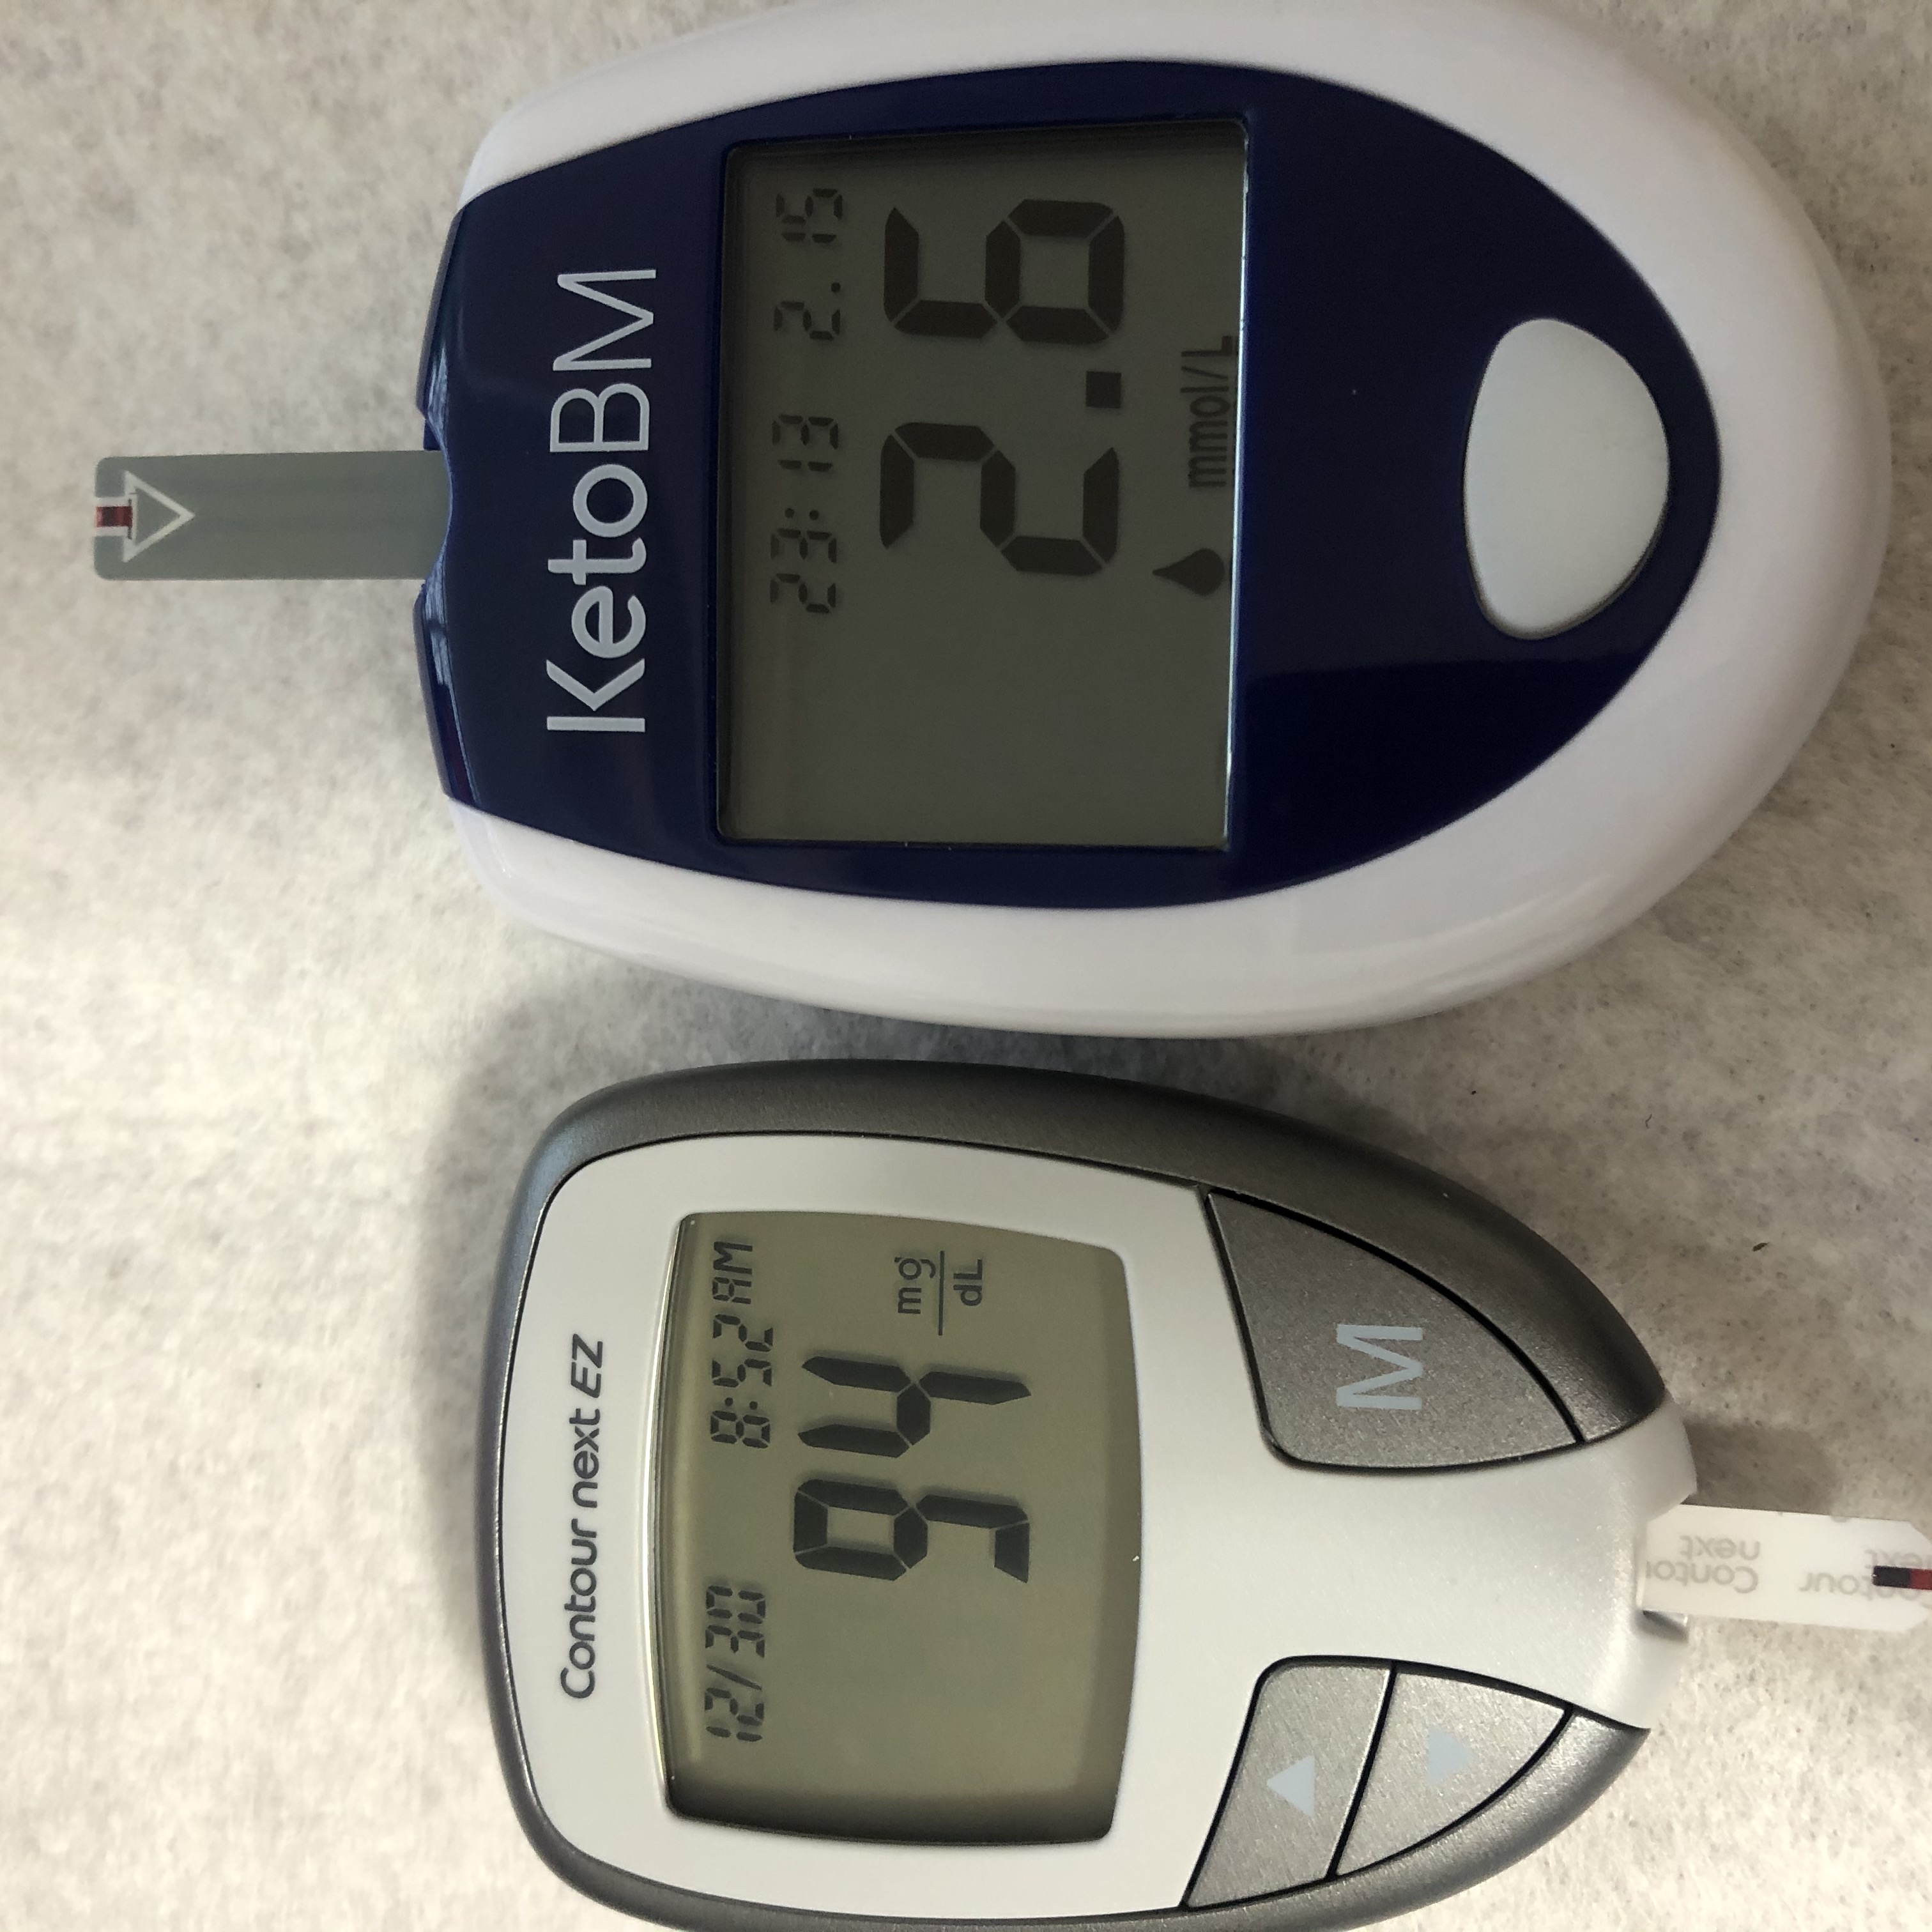 Contour Next EZ Blood Glucose Meter And KetoBM Ketone Meter